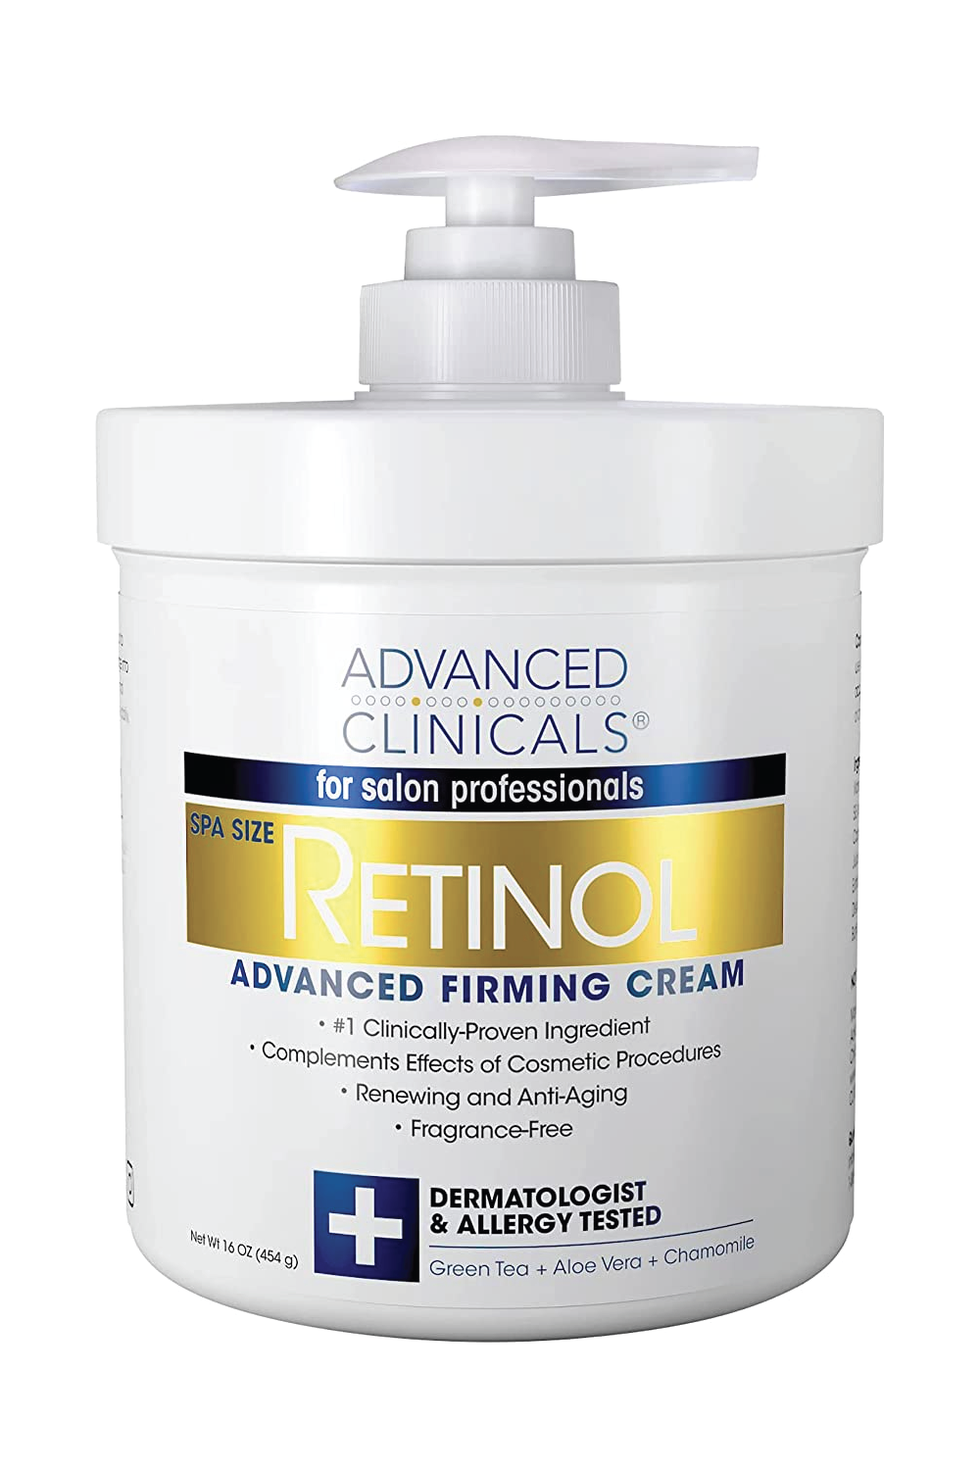 Cellulite reduction creams with retinol